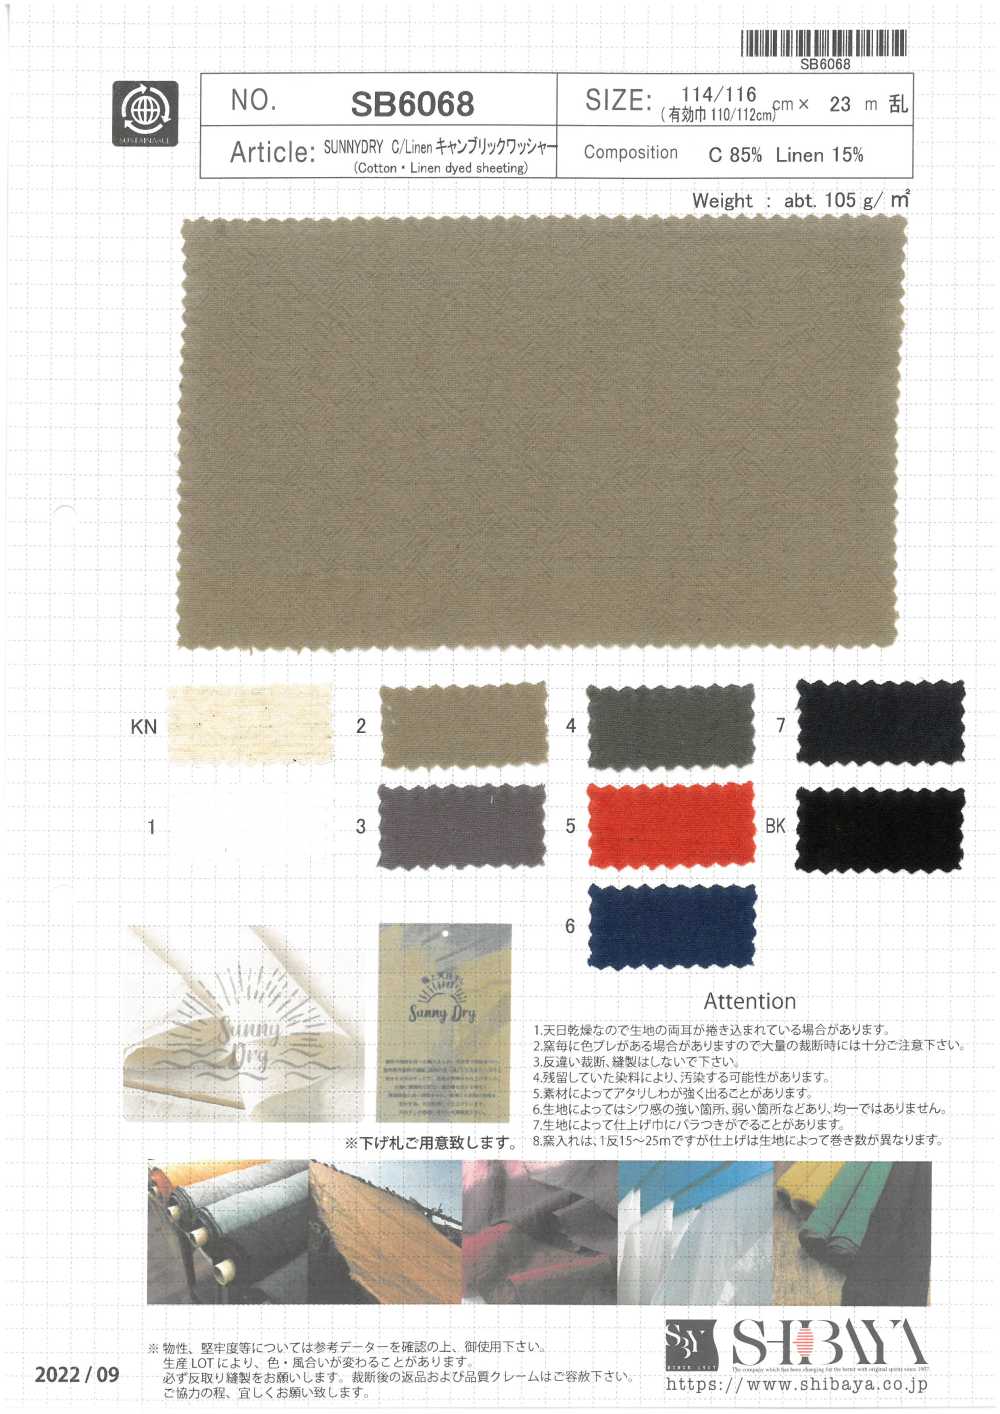 SB6068 SUNNYDRY Coton Lin Cambric Rondelle Traitement[Fabrication De Textile] SHIBAYA